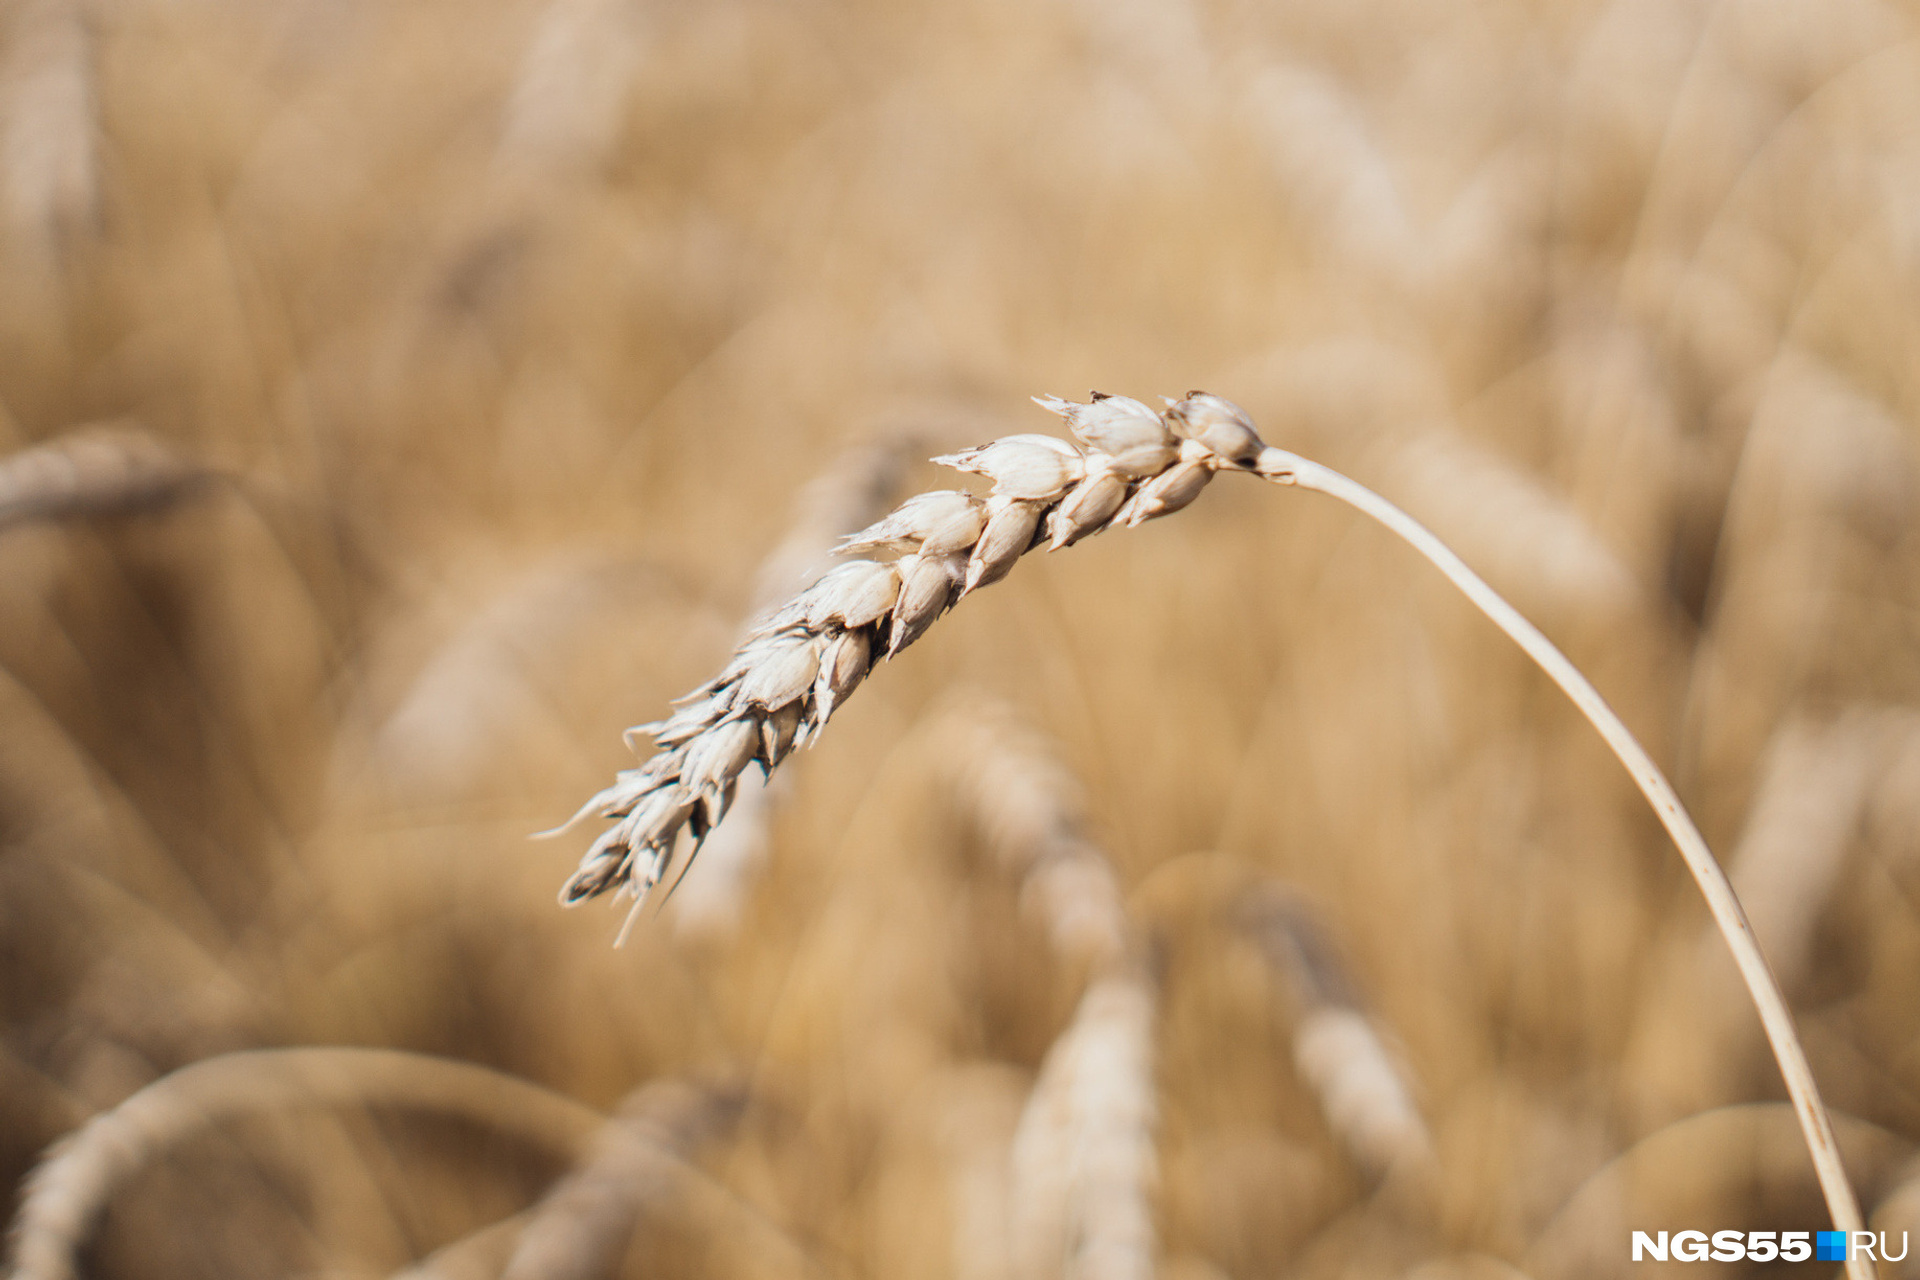 Цена на пшеницу снизилась, а на технику — выросла